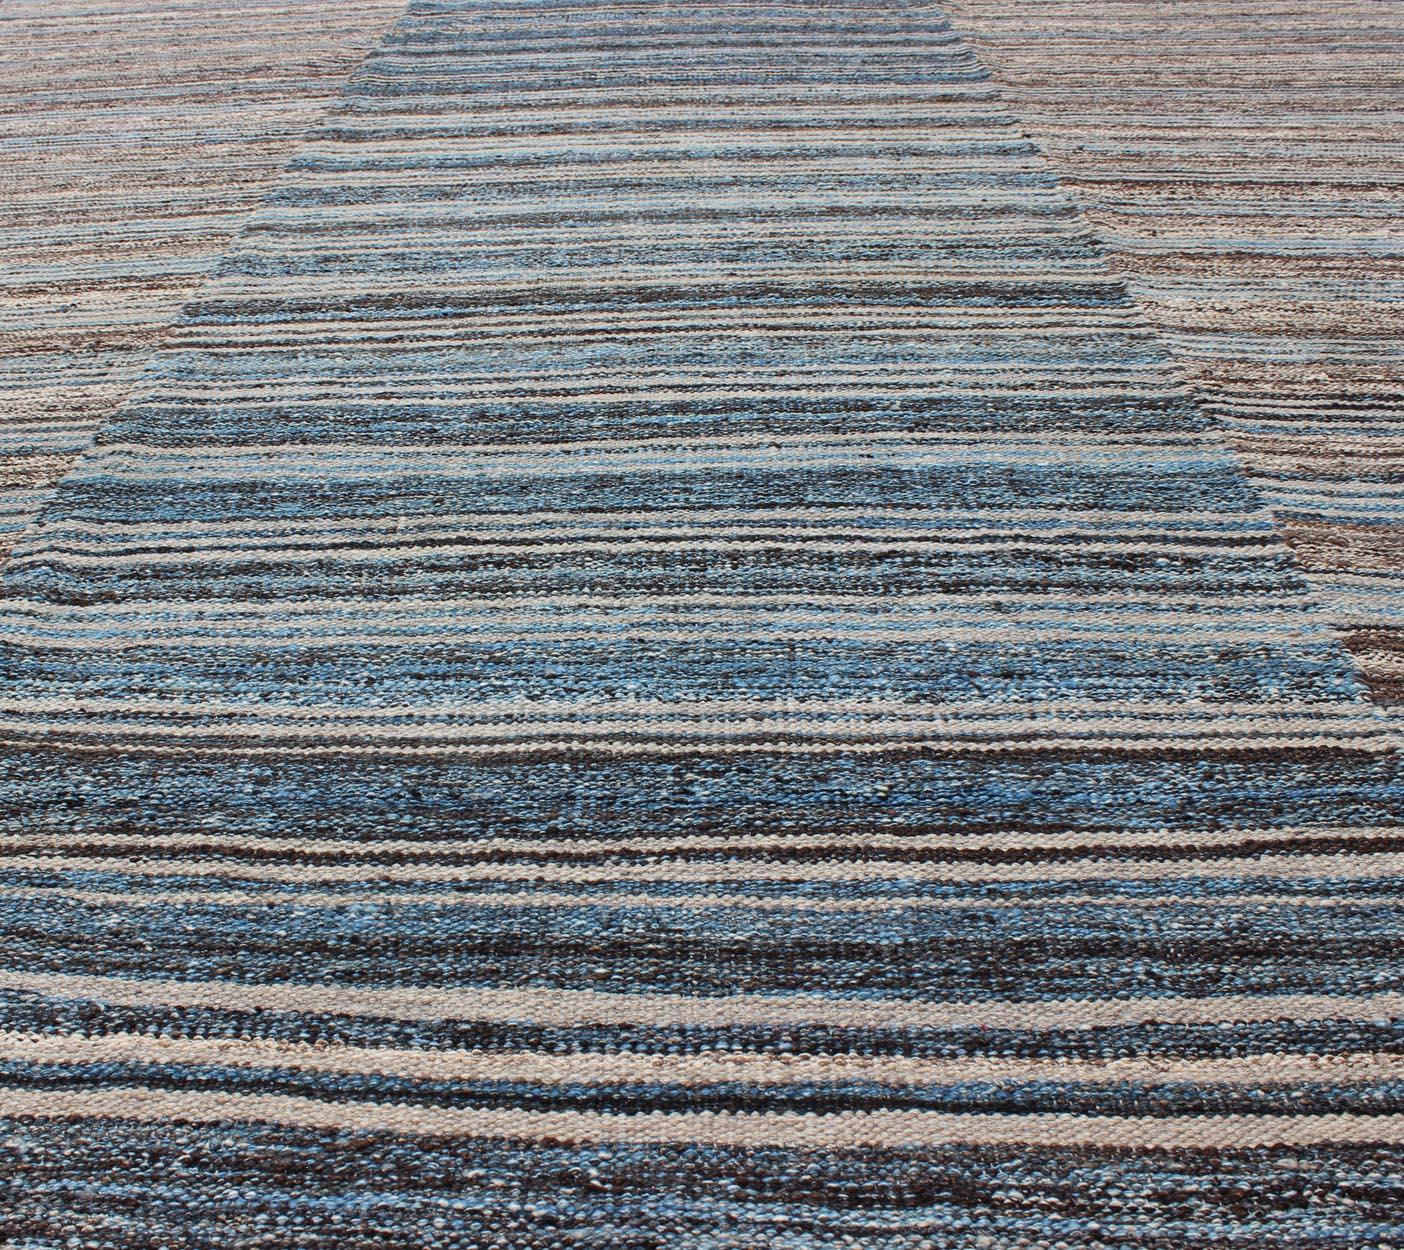 Wool Flat-Weave Kilim Rug with Classic Stripe Design in Blue, Cream, Brown